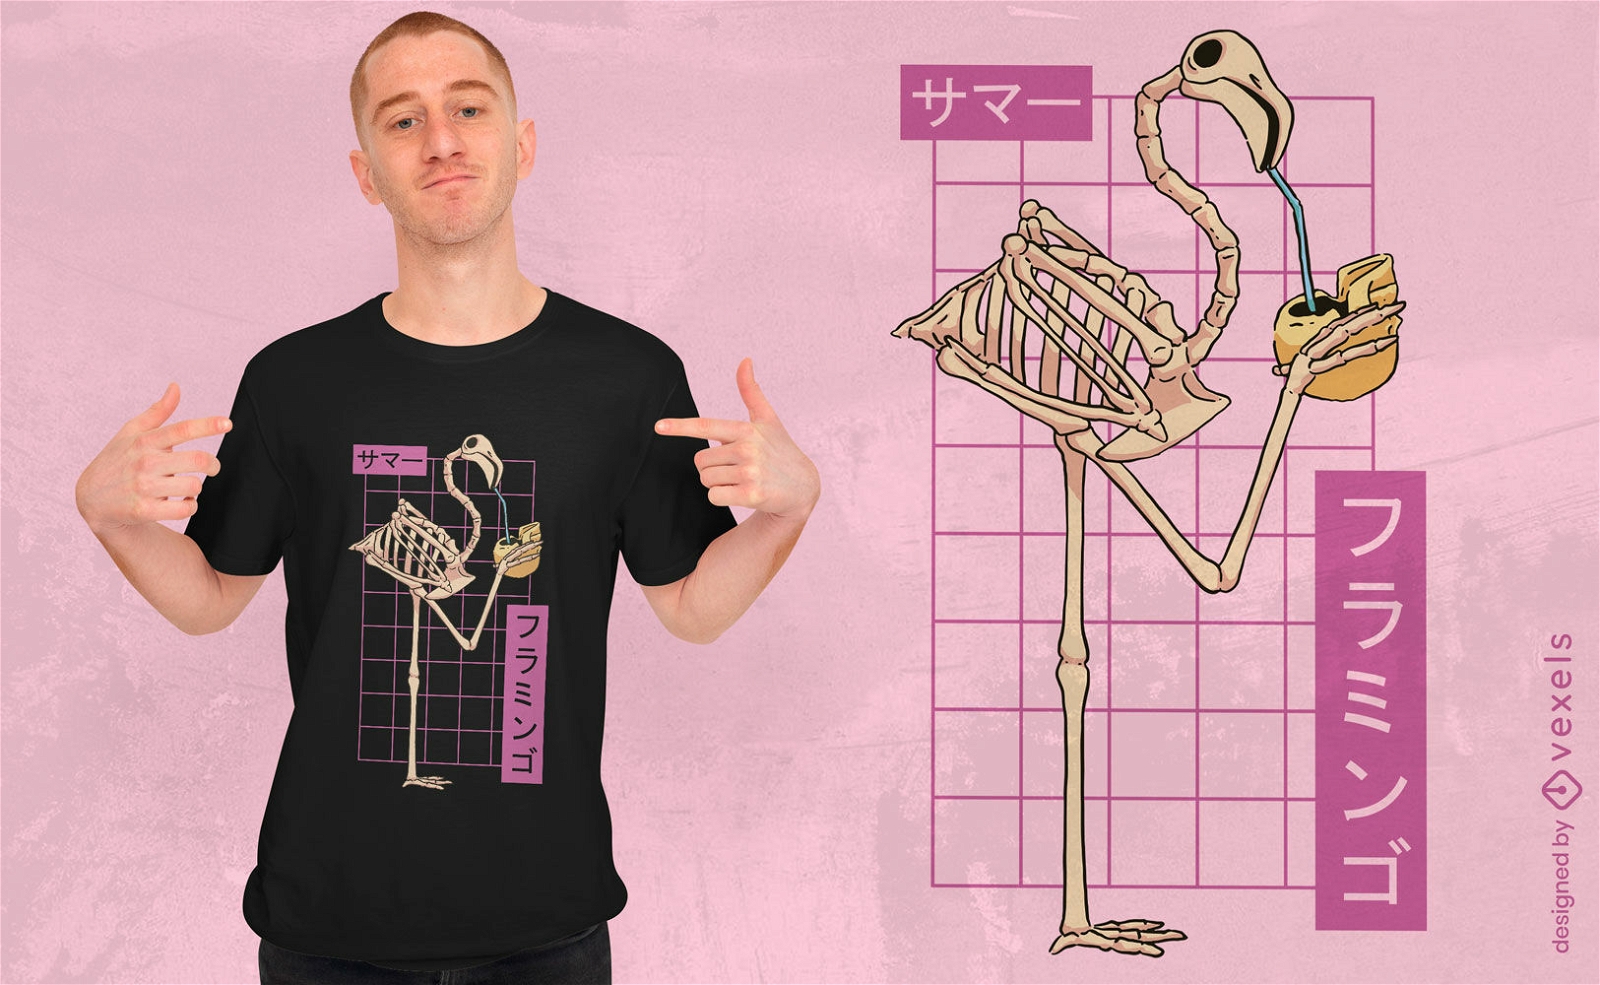 Flamingo skeleton t-shirt design